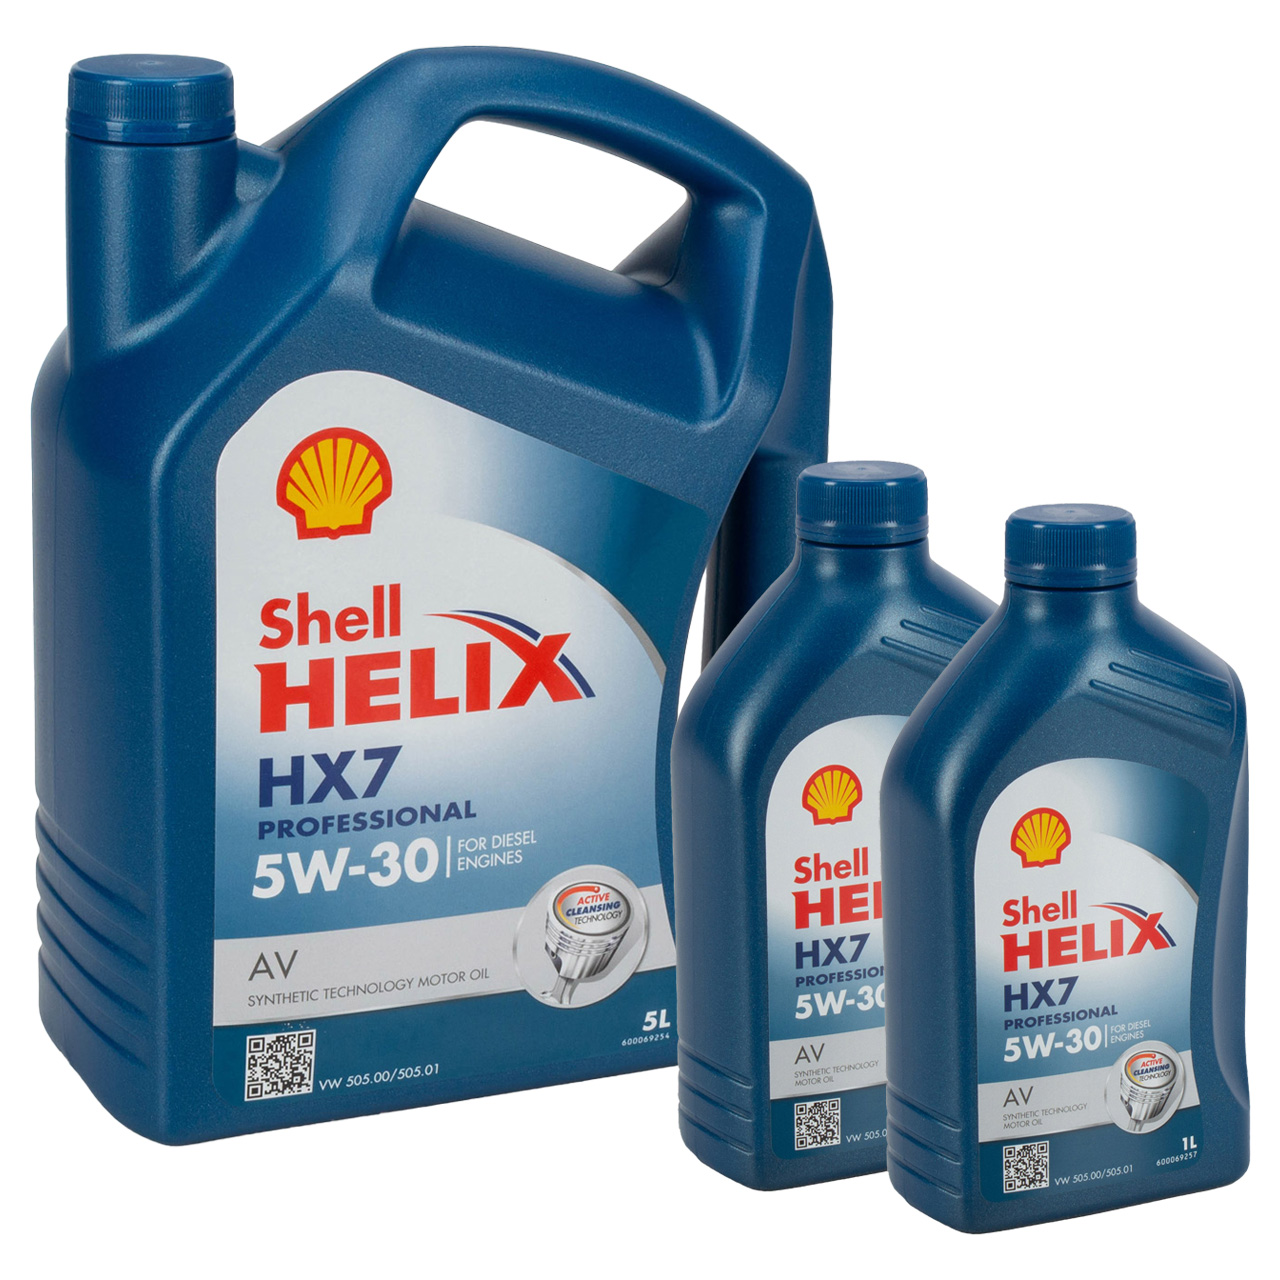 7L 7 Liter SHELL HELIX HX7 PROFESSIONAL AV 5W-30 Motoröl Öl ACEA C3 VW 505.00/01